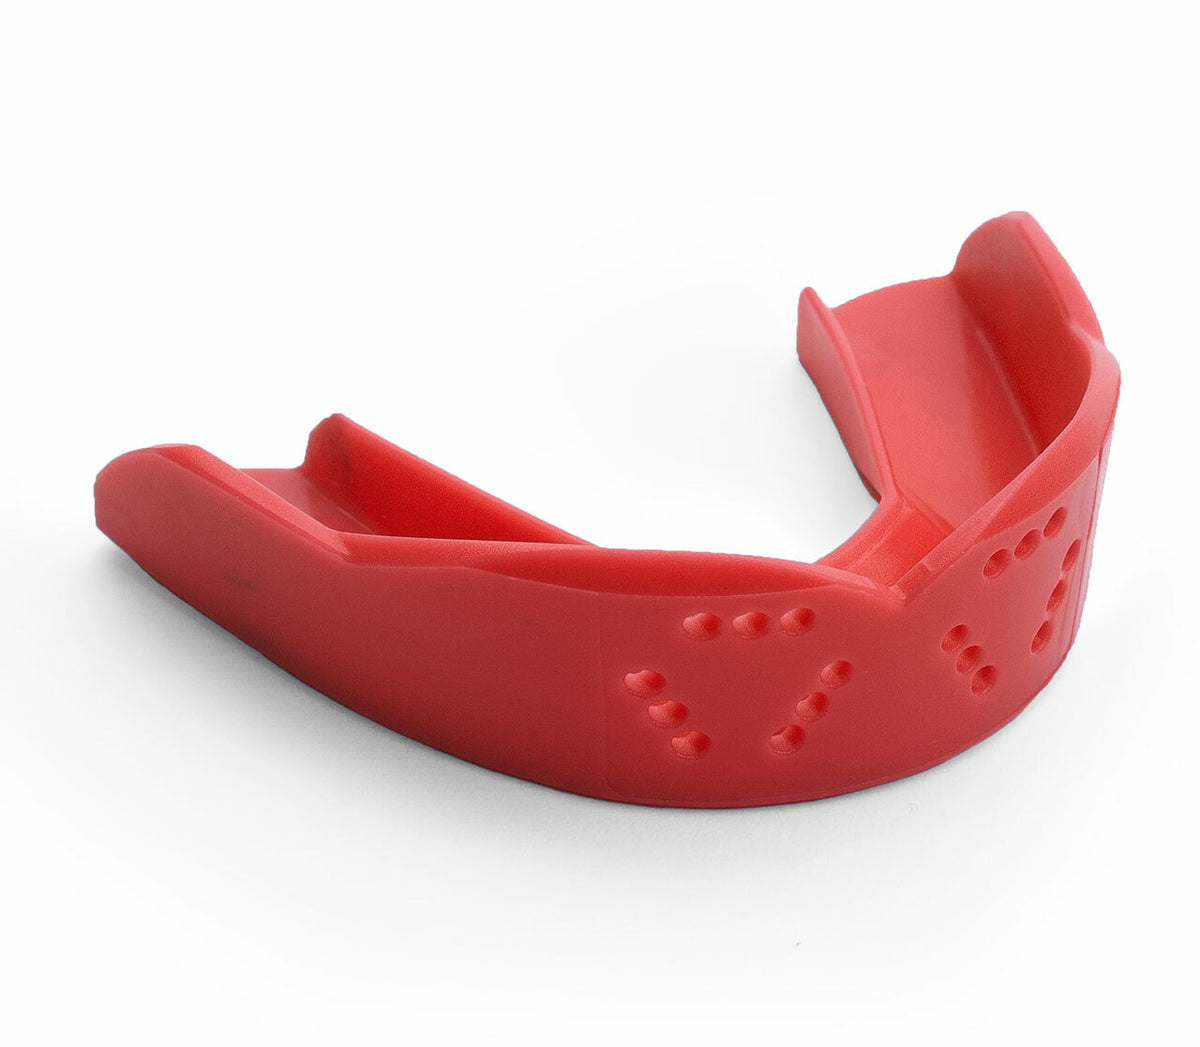 3D Custom Fit Mouth Guard